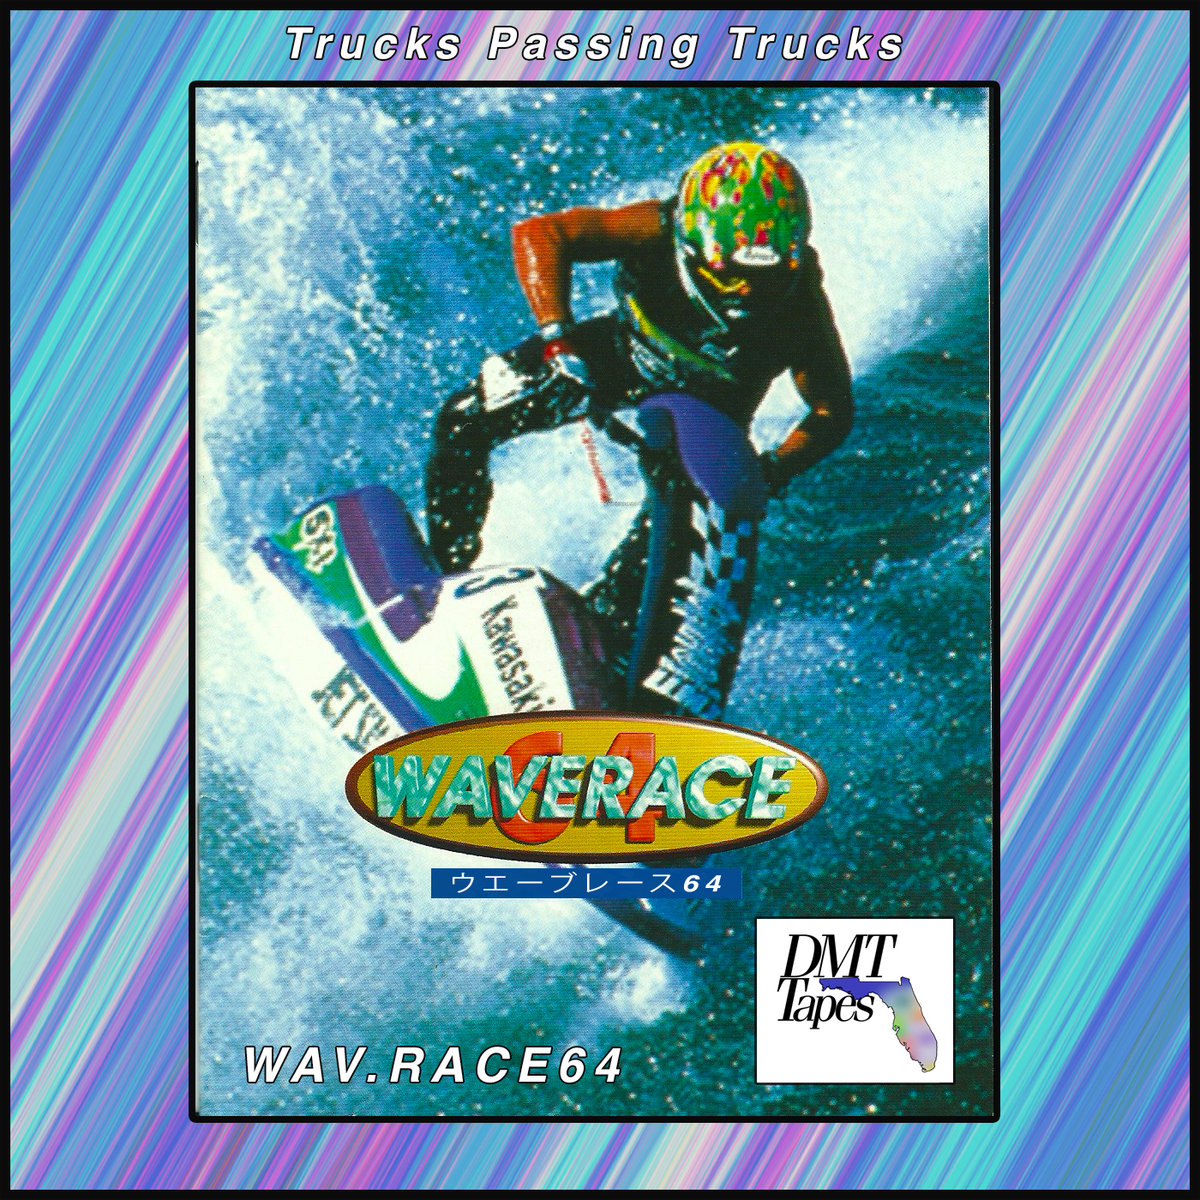 ‘Wave Race 64’ tracks and vaporwave join forces for new cassette, VHS ‹ Modern Vinyl